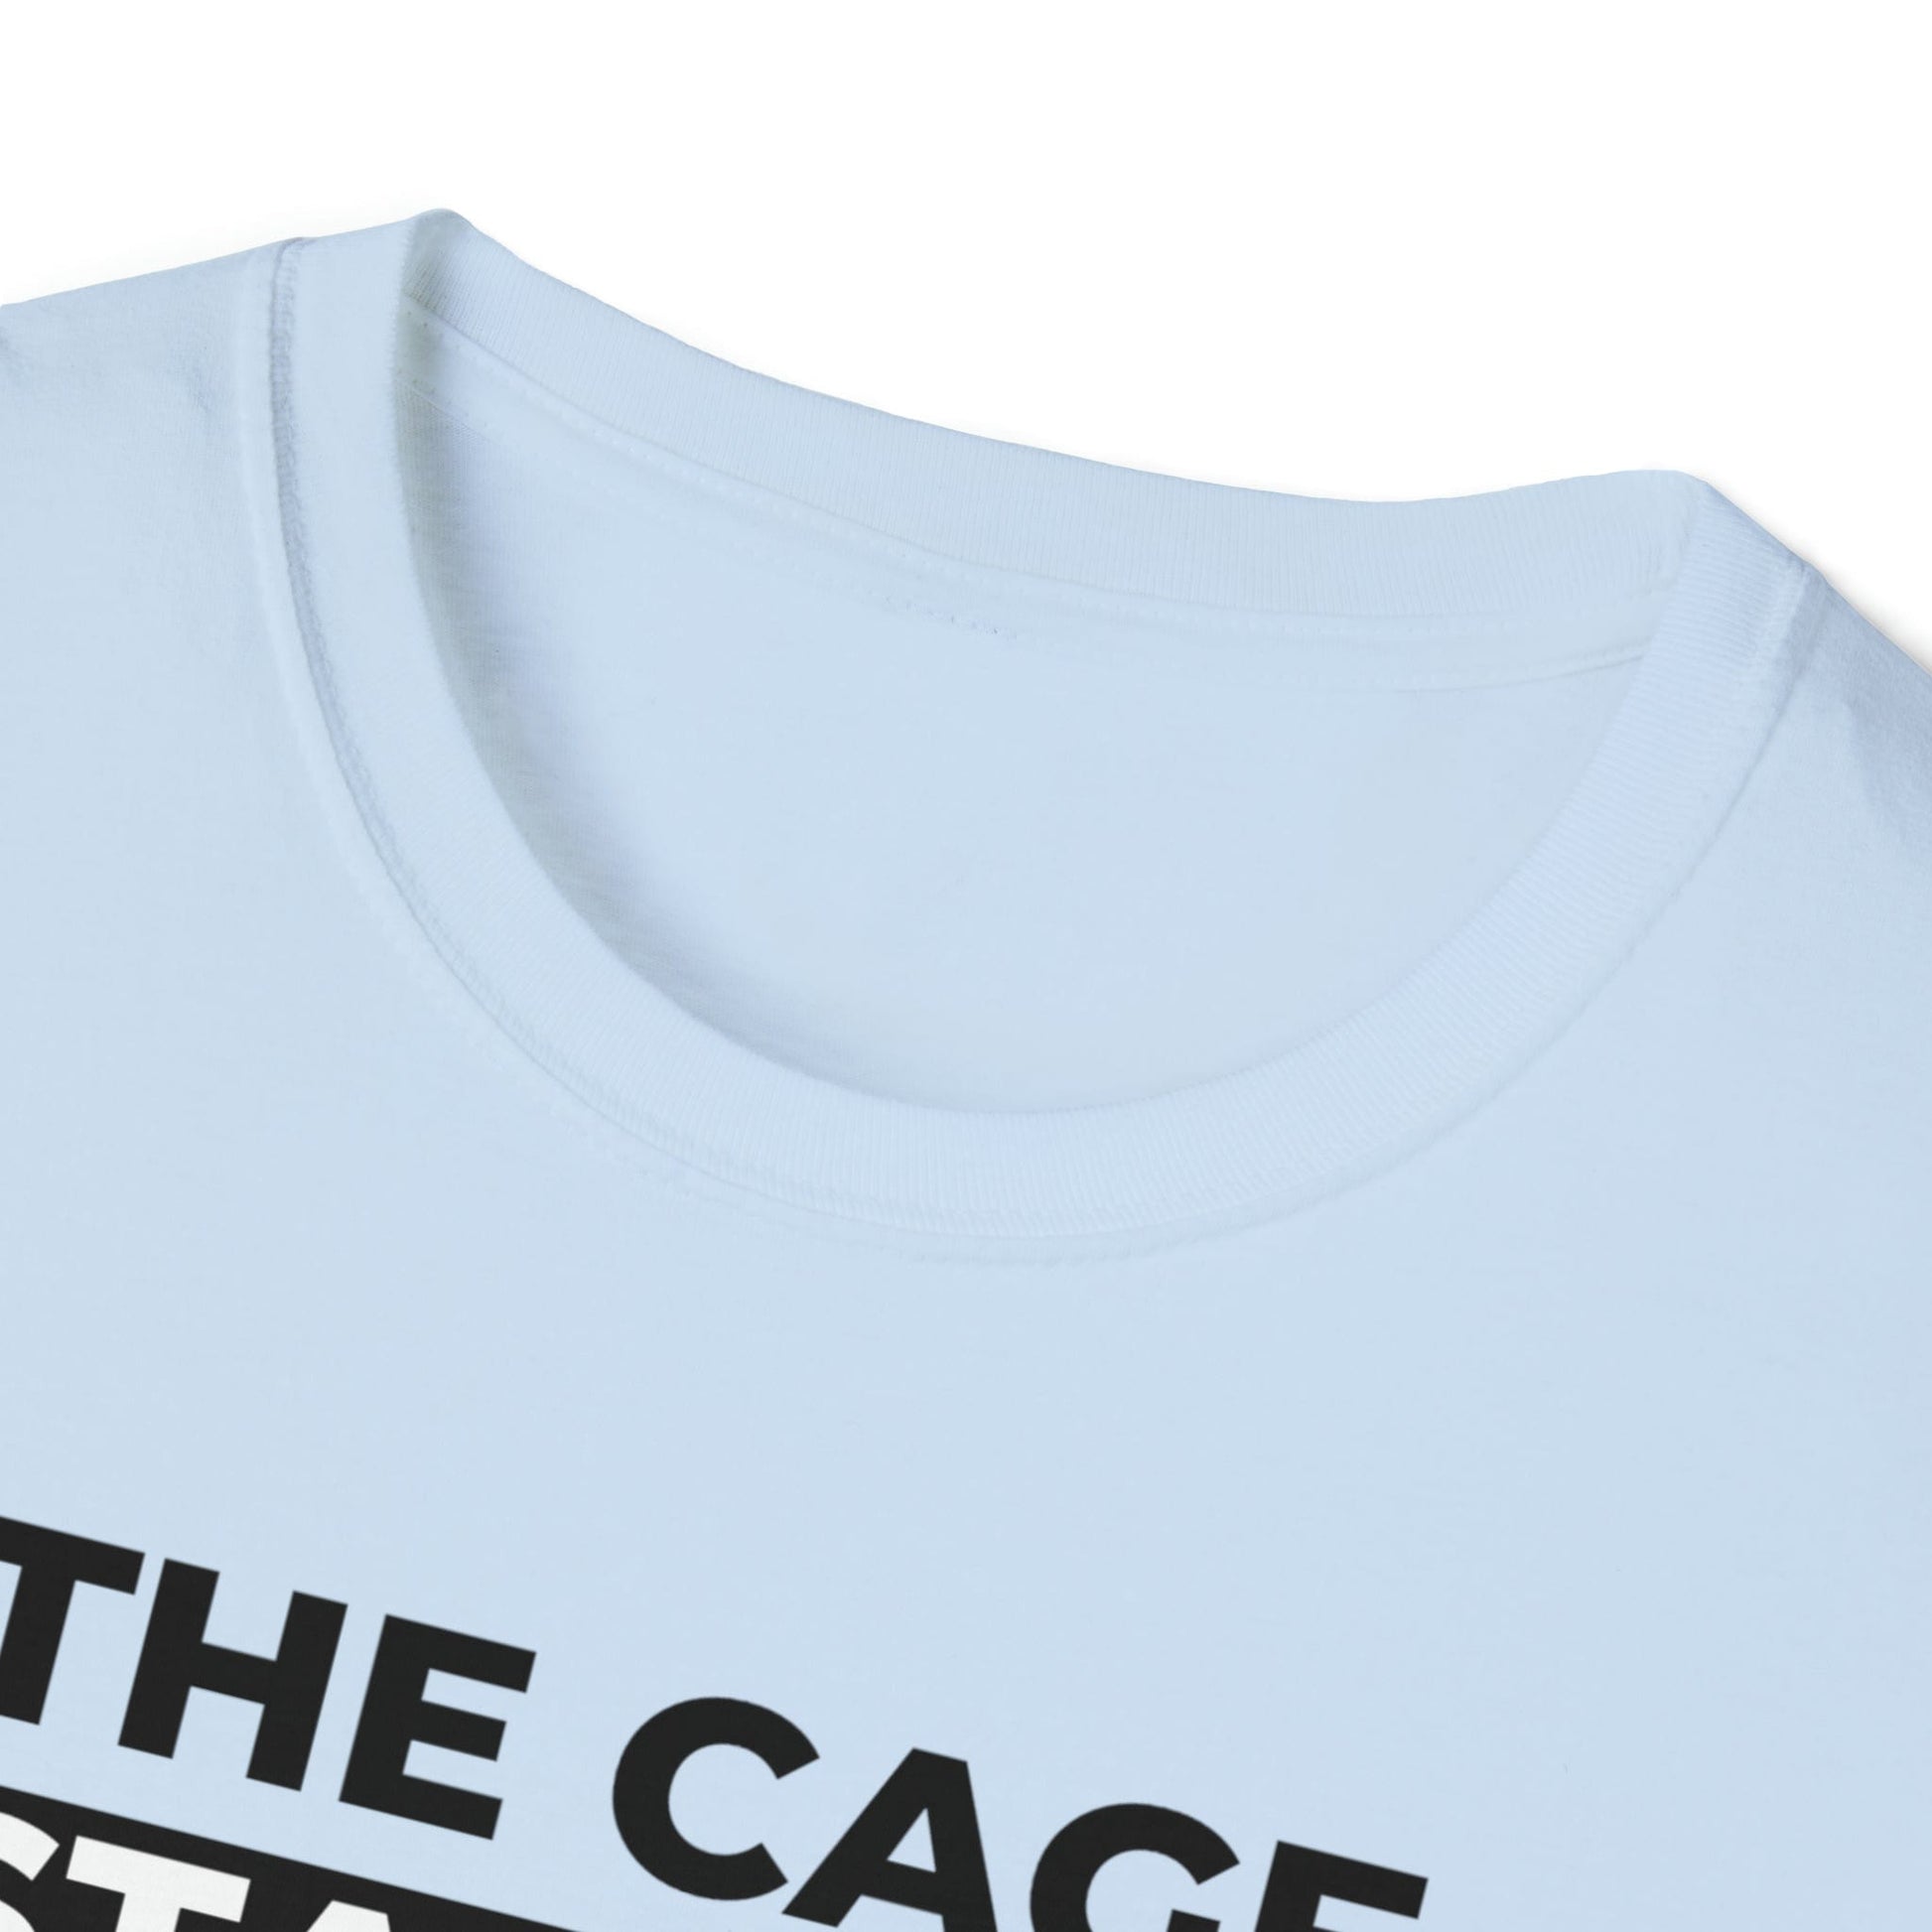 T-Shirt Cage Stays On - Lockedboy Athletics Chastity Tshirt LEATHERDADDY BATOR